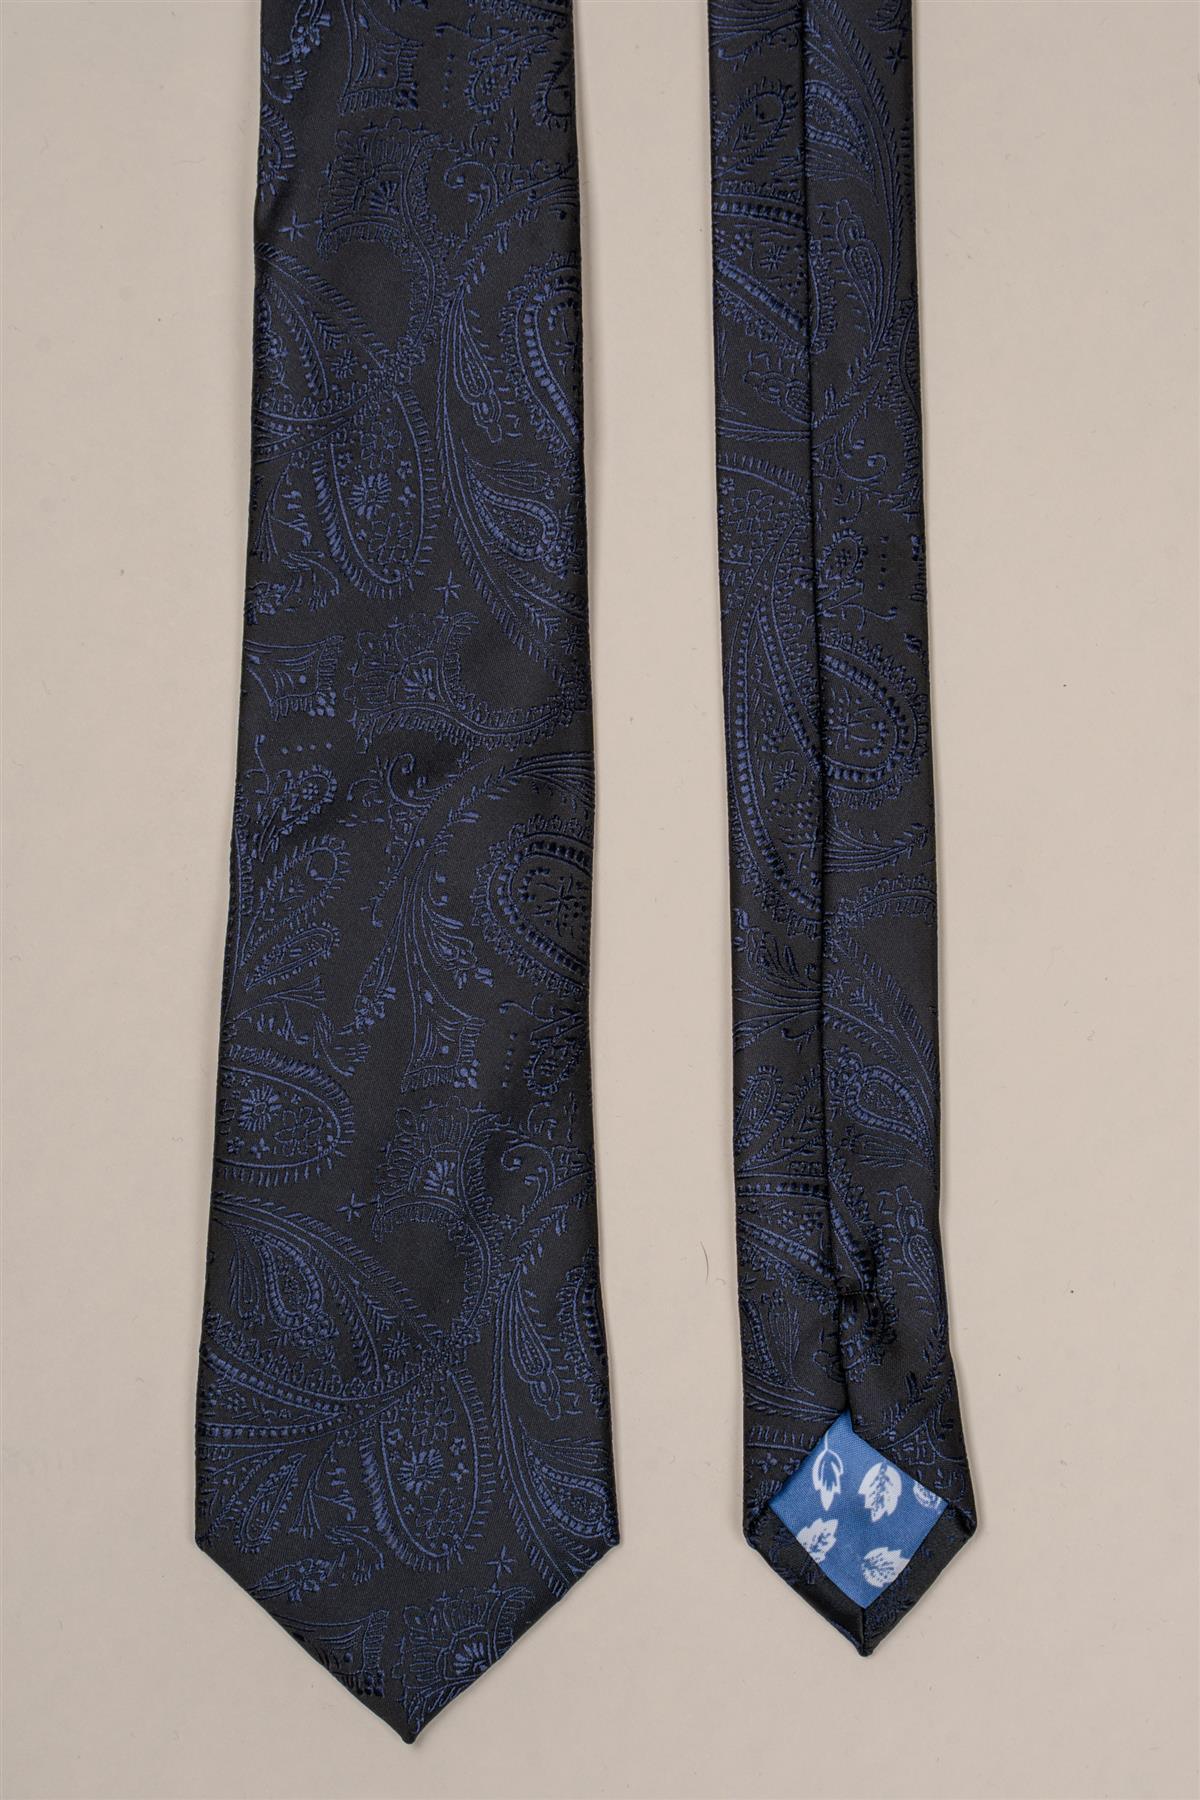 CV813 patterned tie